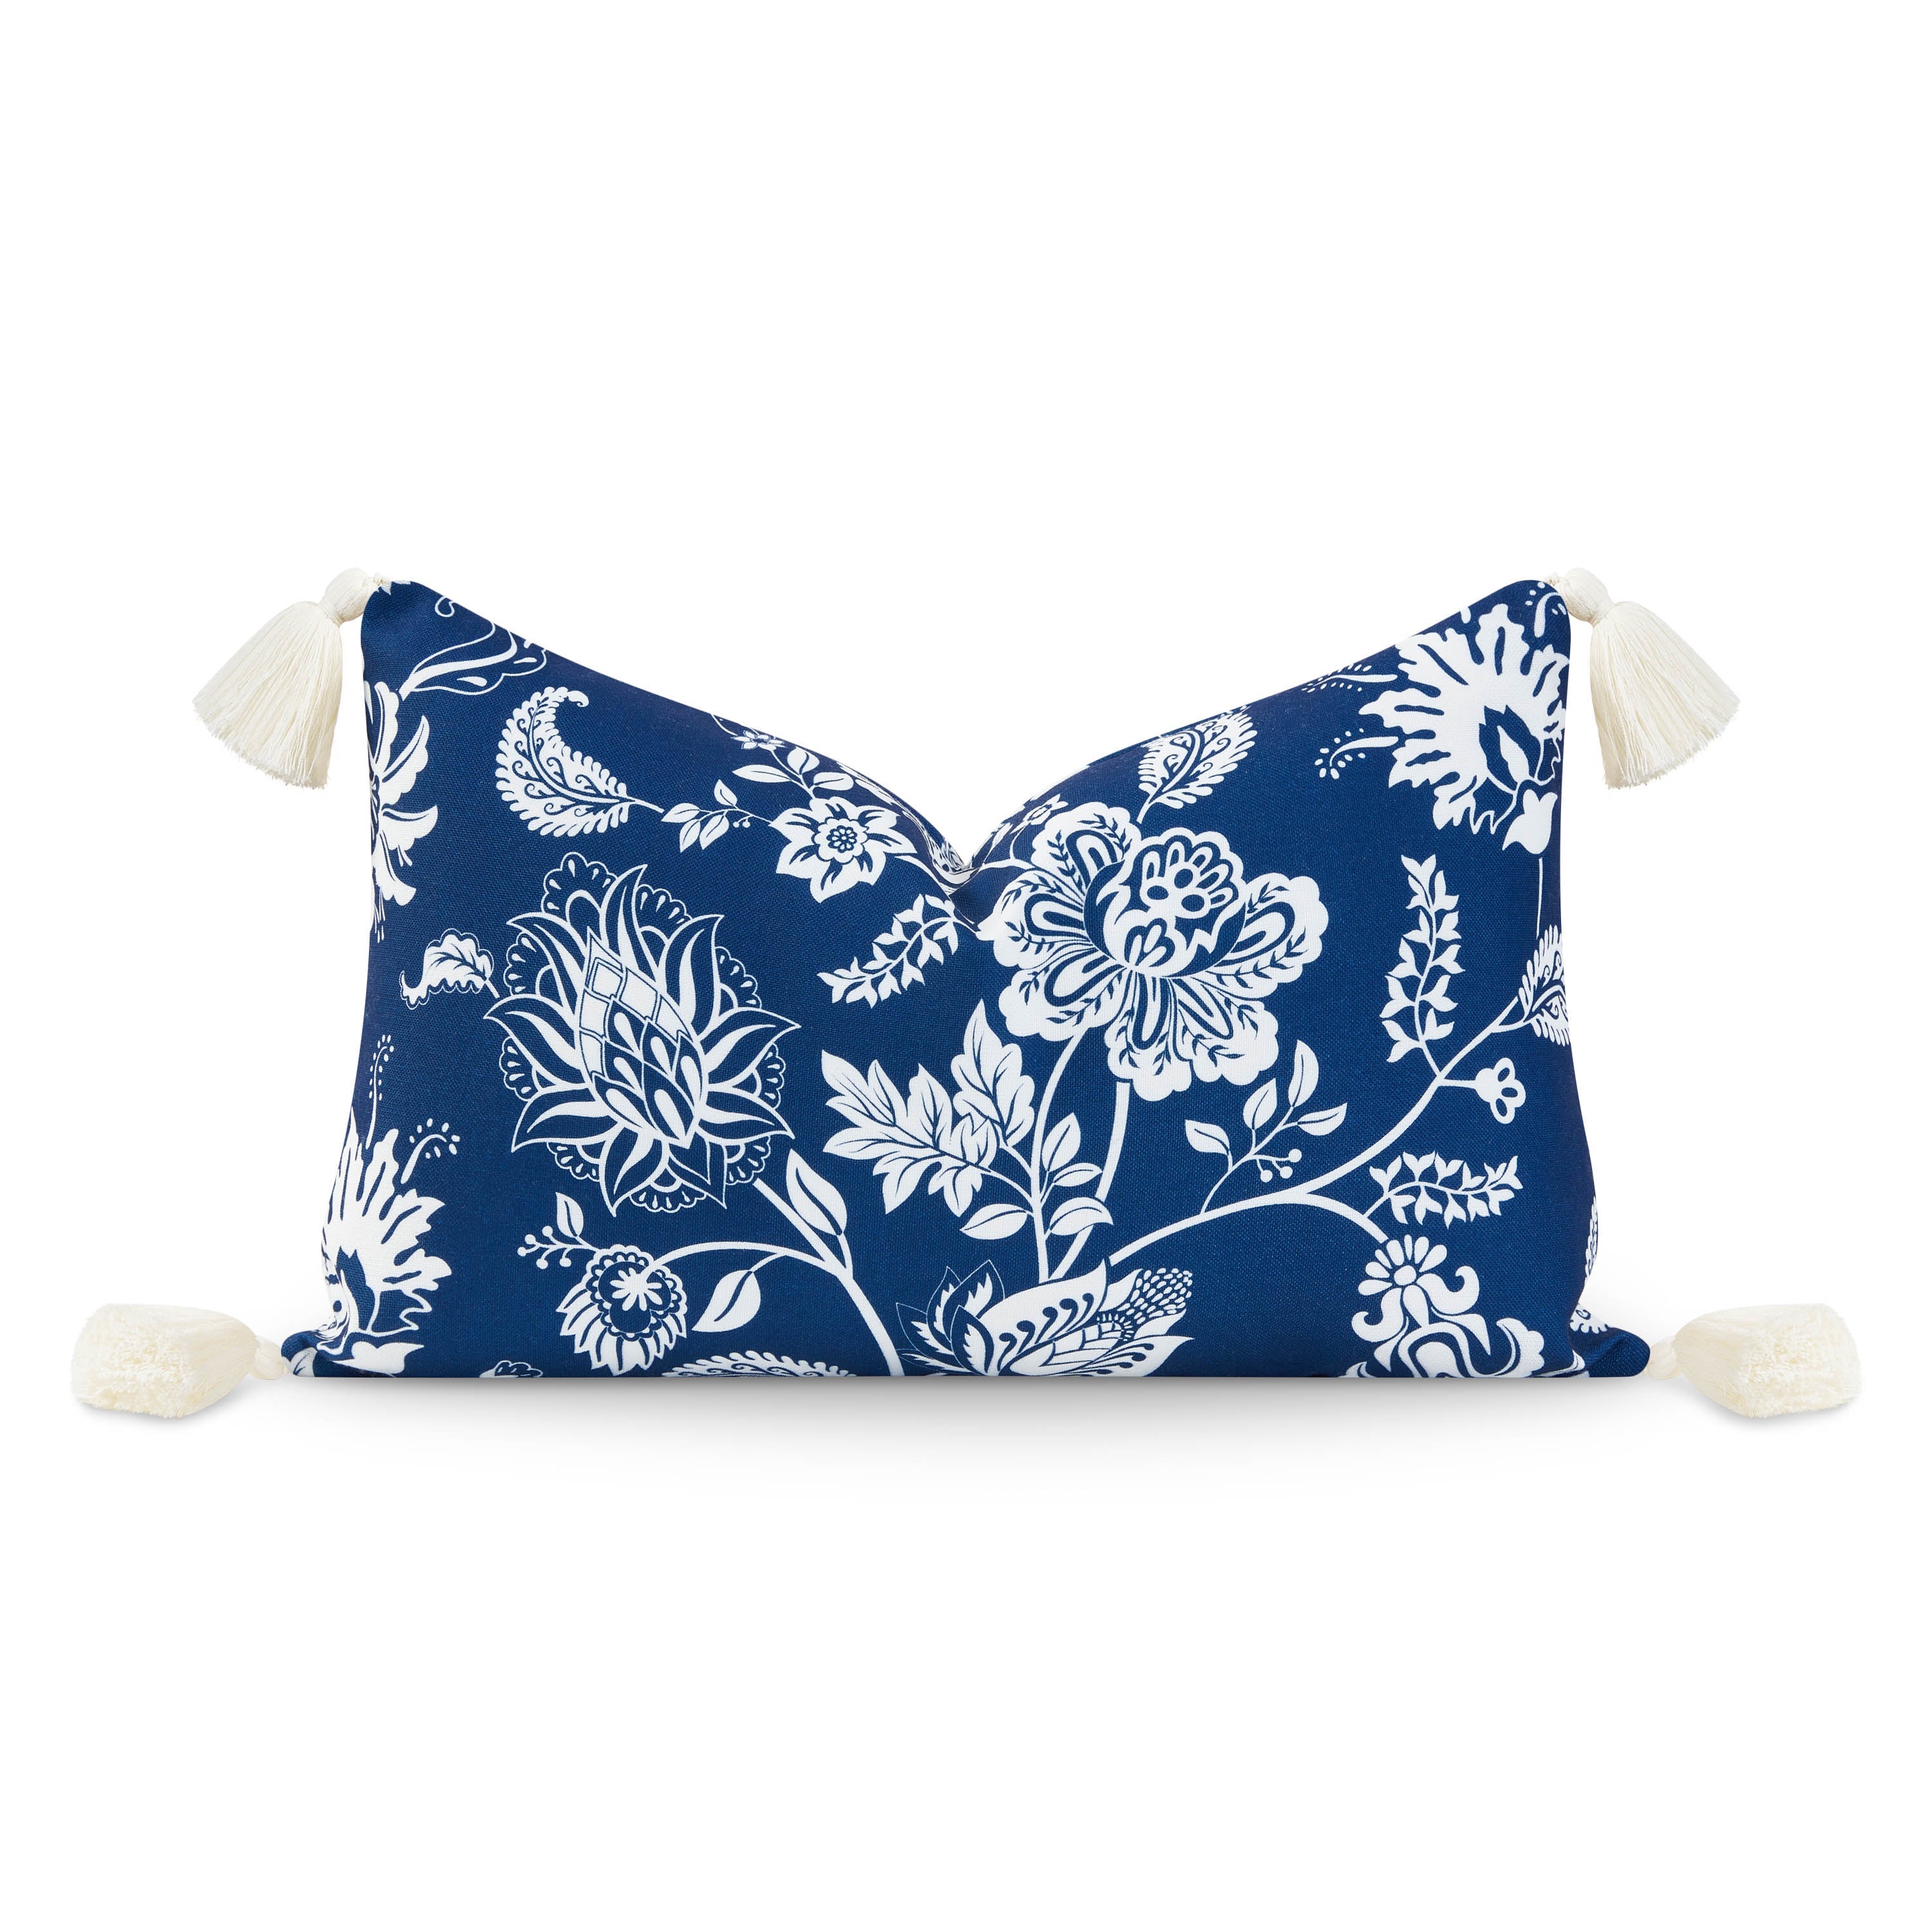 Coastal Hampton Style Indoor Outdoor Lumbar Pillow Cover, Floral Tassel, Navy Blue, 12"x20"